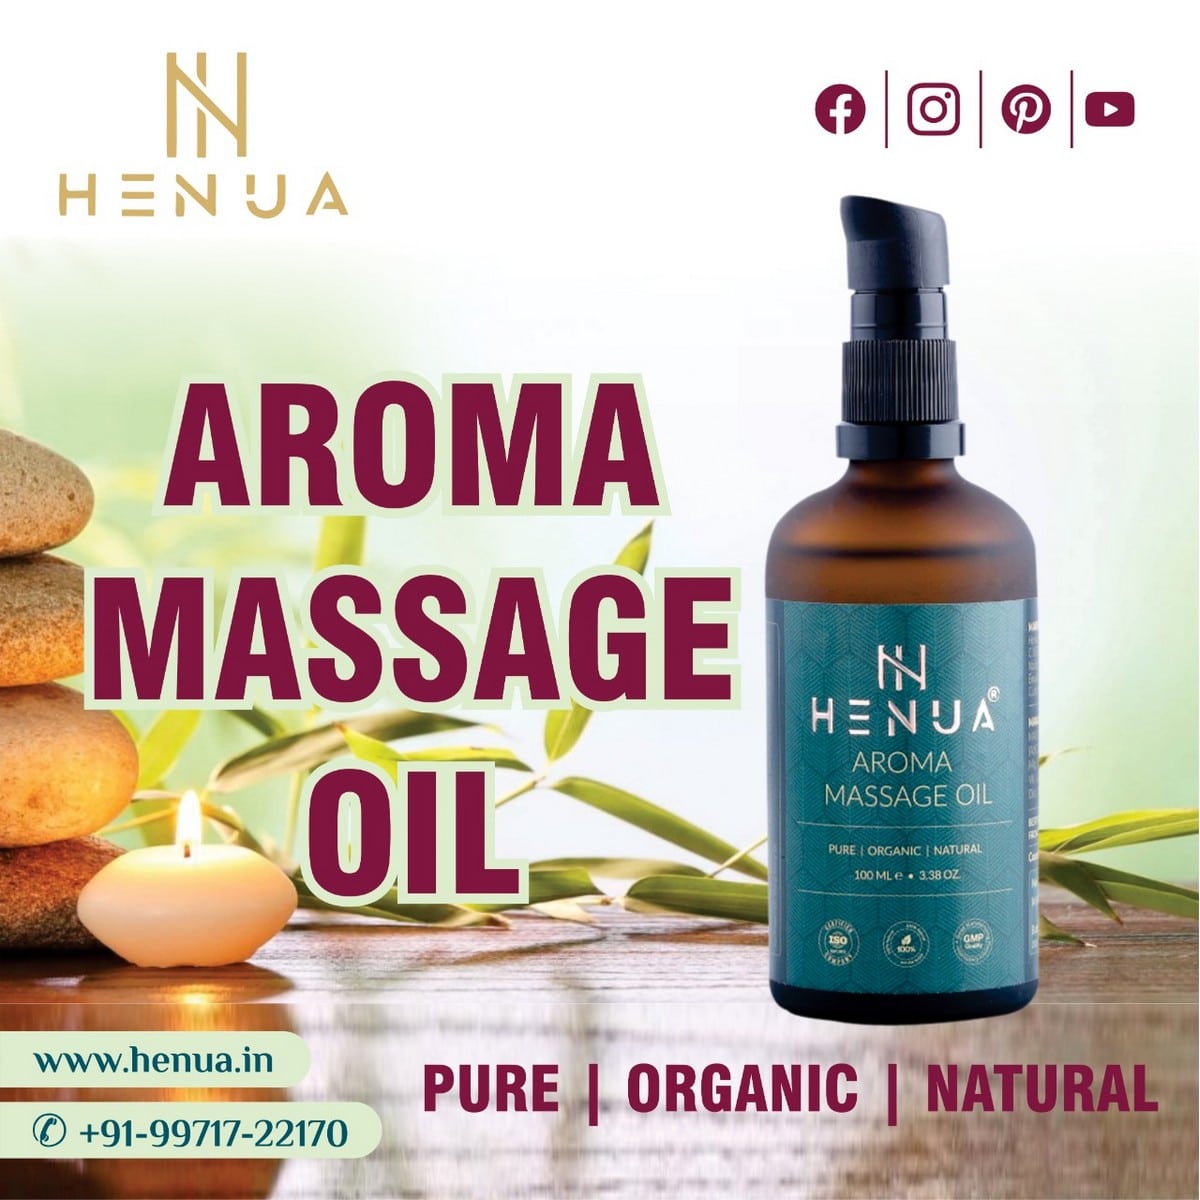 Aromatic Massage Oil of Henua